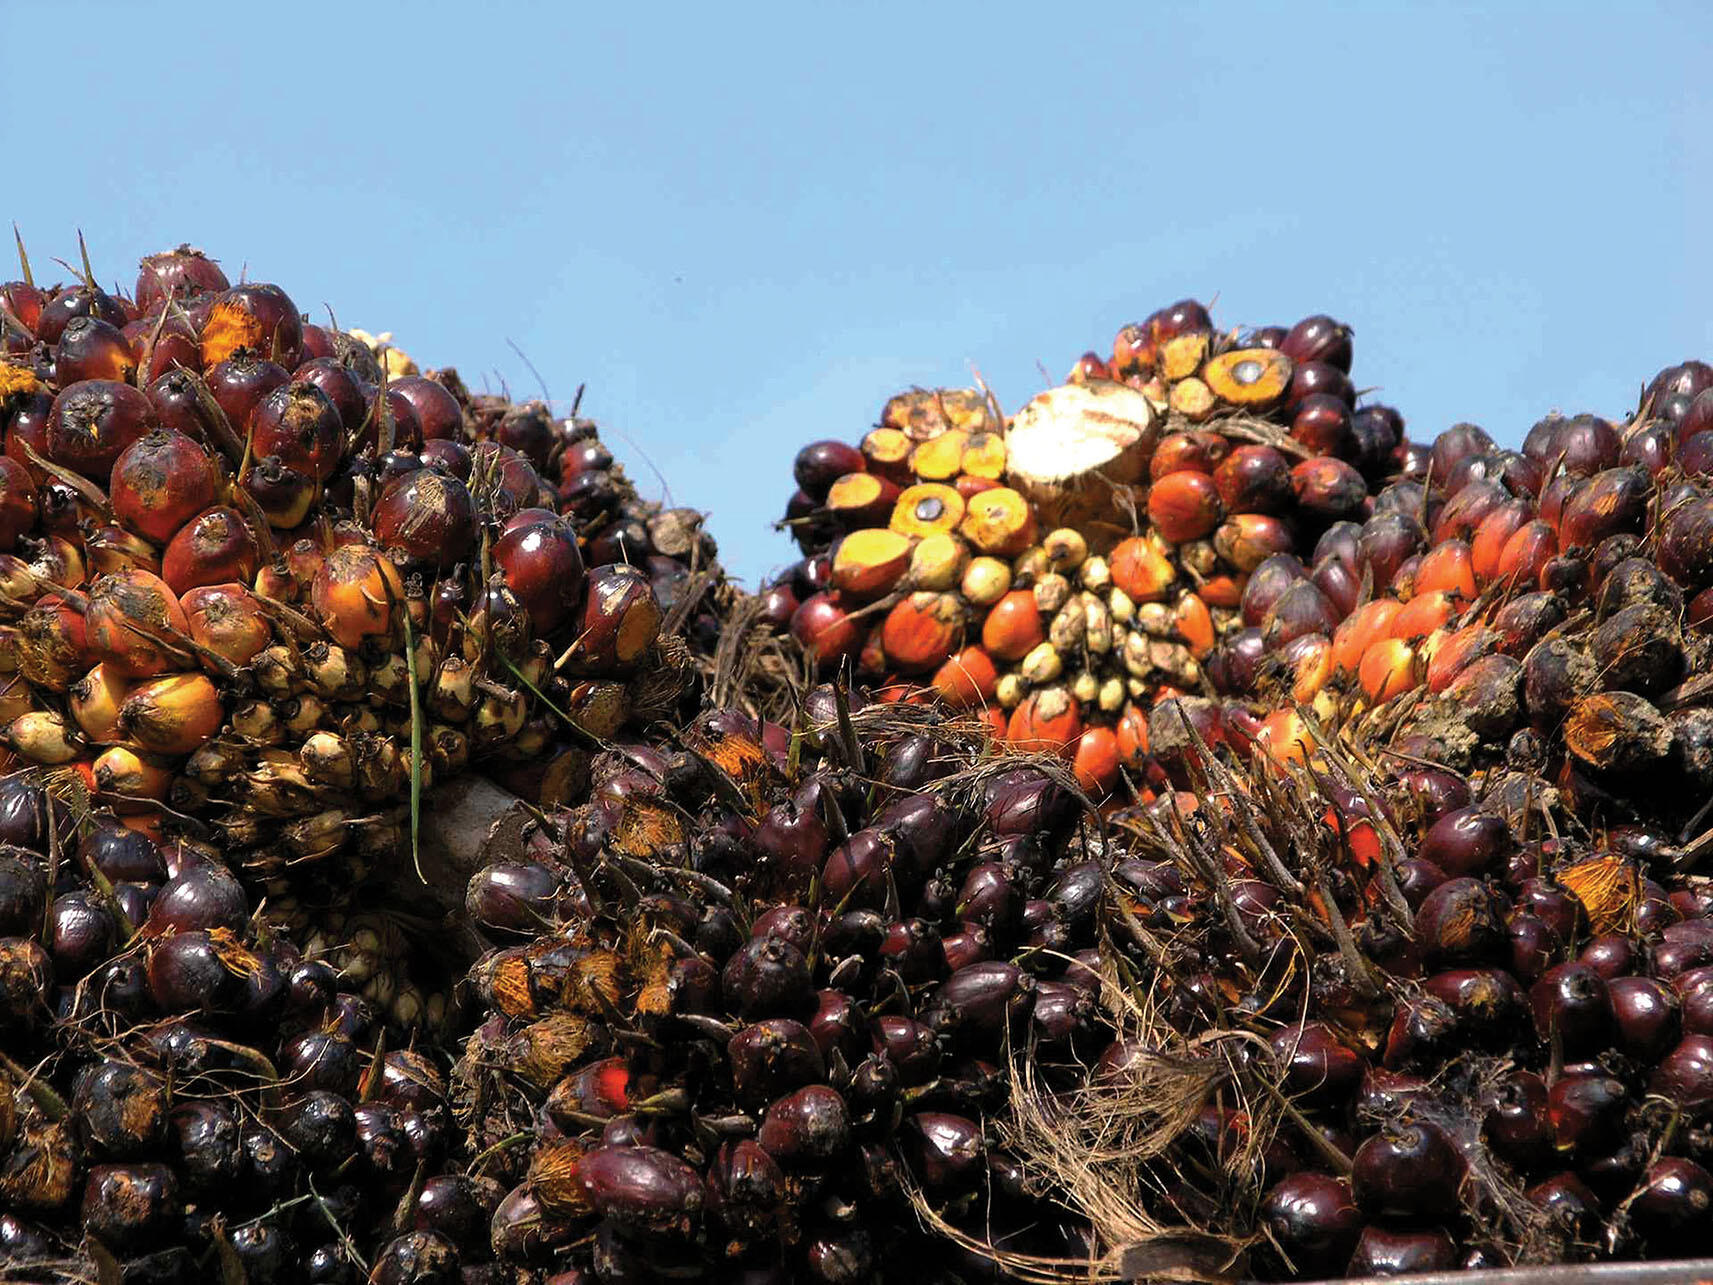 Piles of harvested palm fruit. (Photo by Enriqueta Flores-Guevara & Lon Brehmer.)